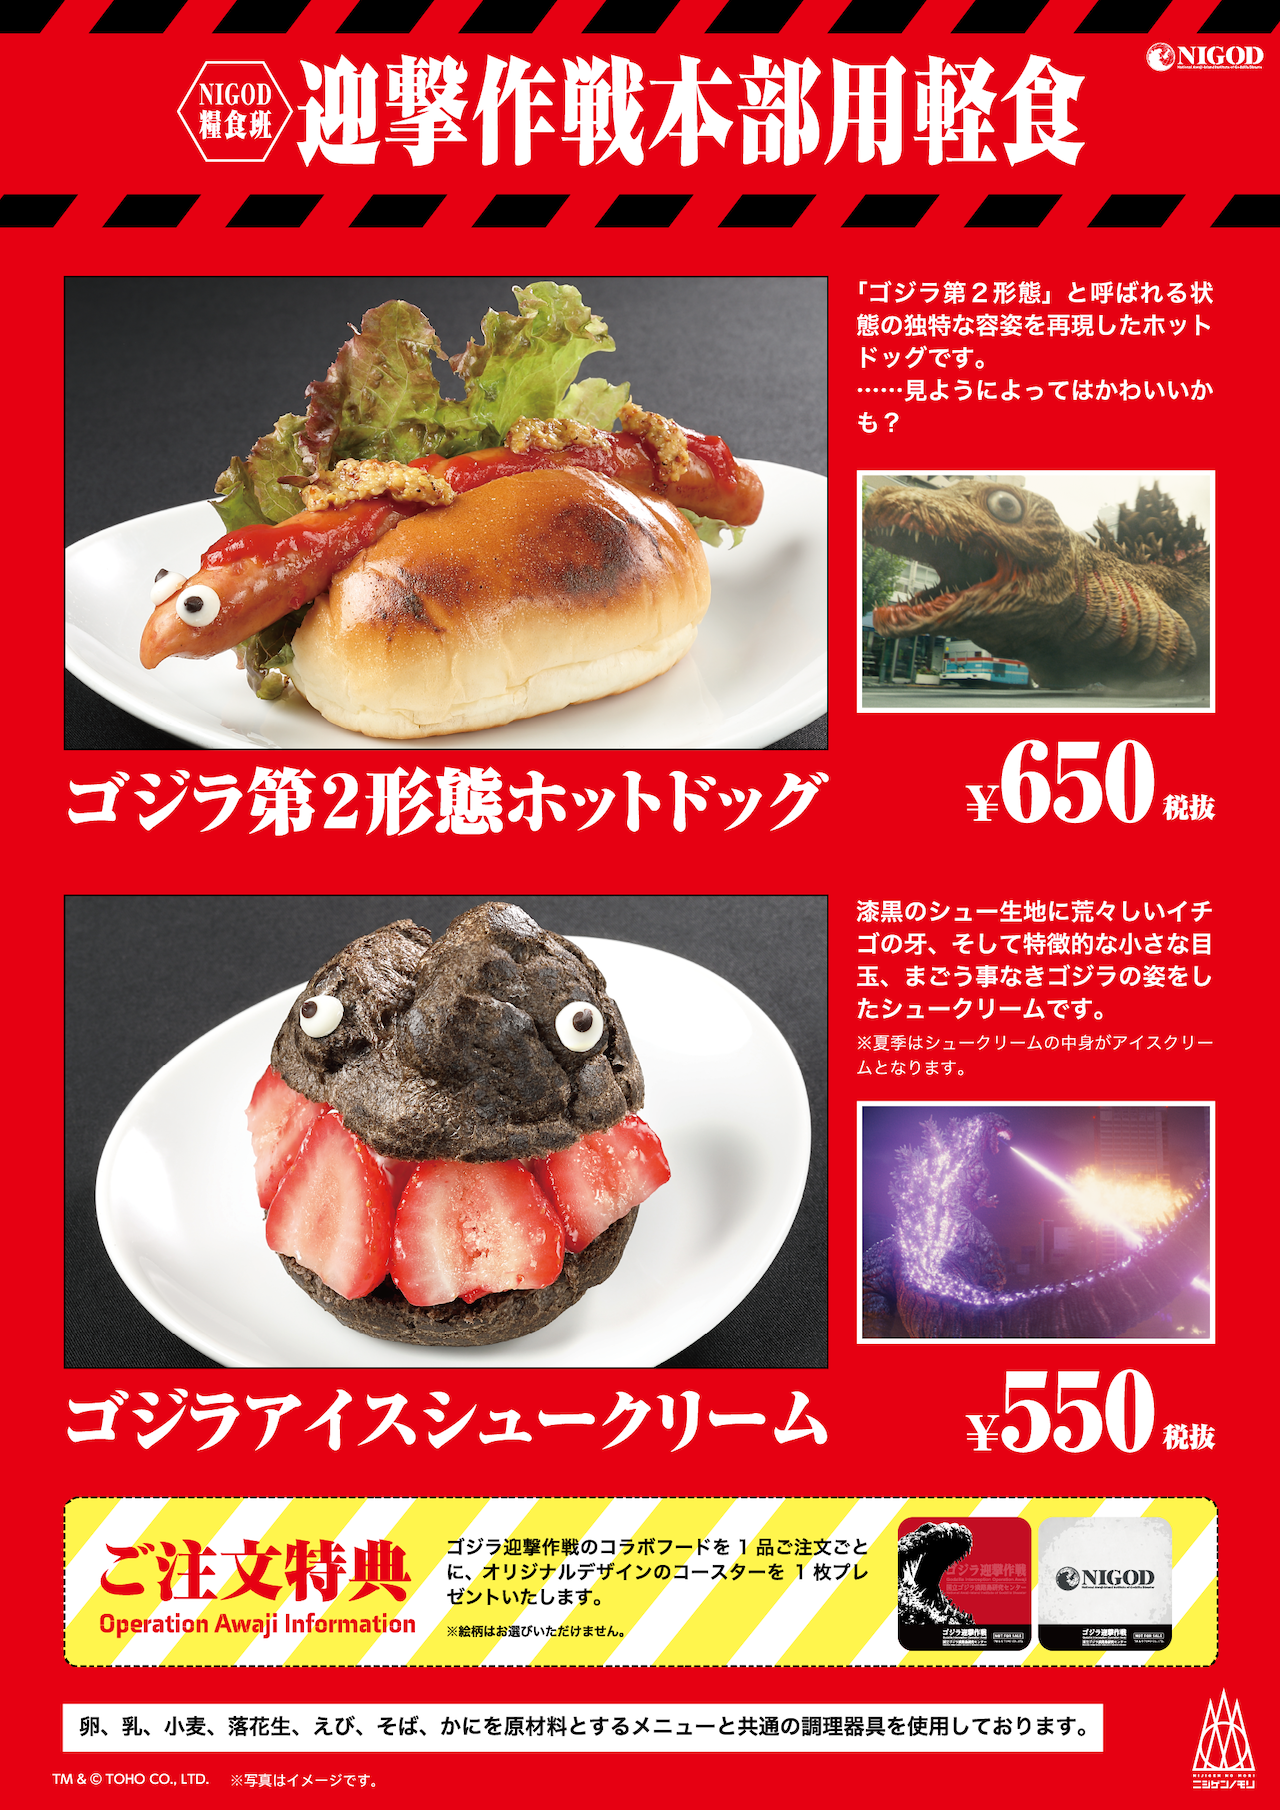 A menu of monster-shaped foods